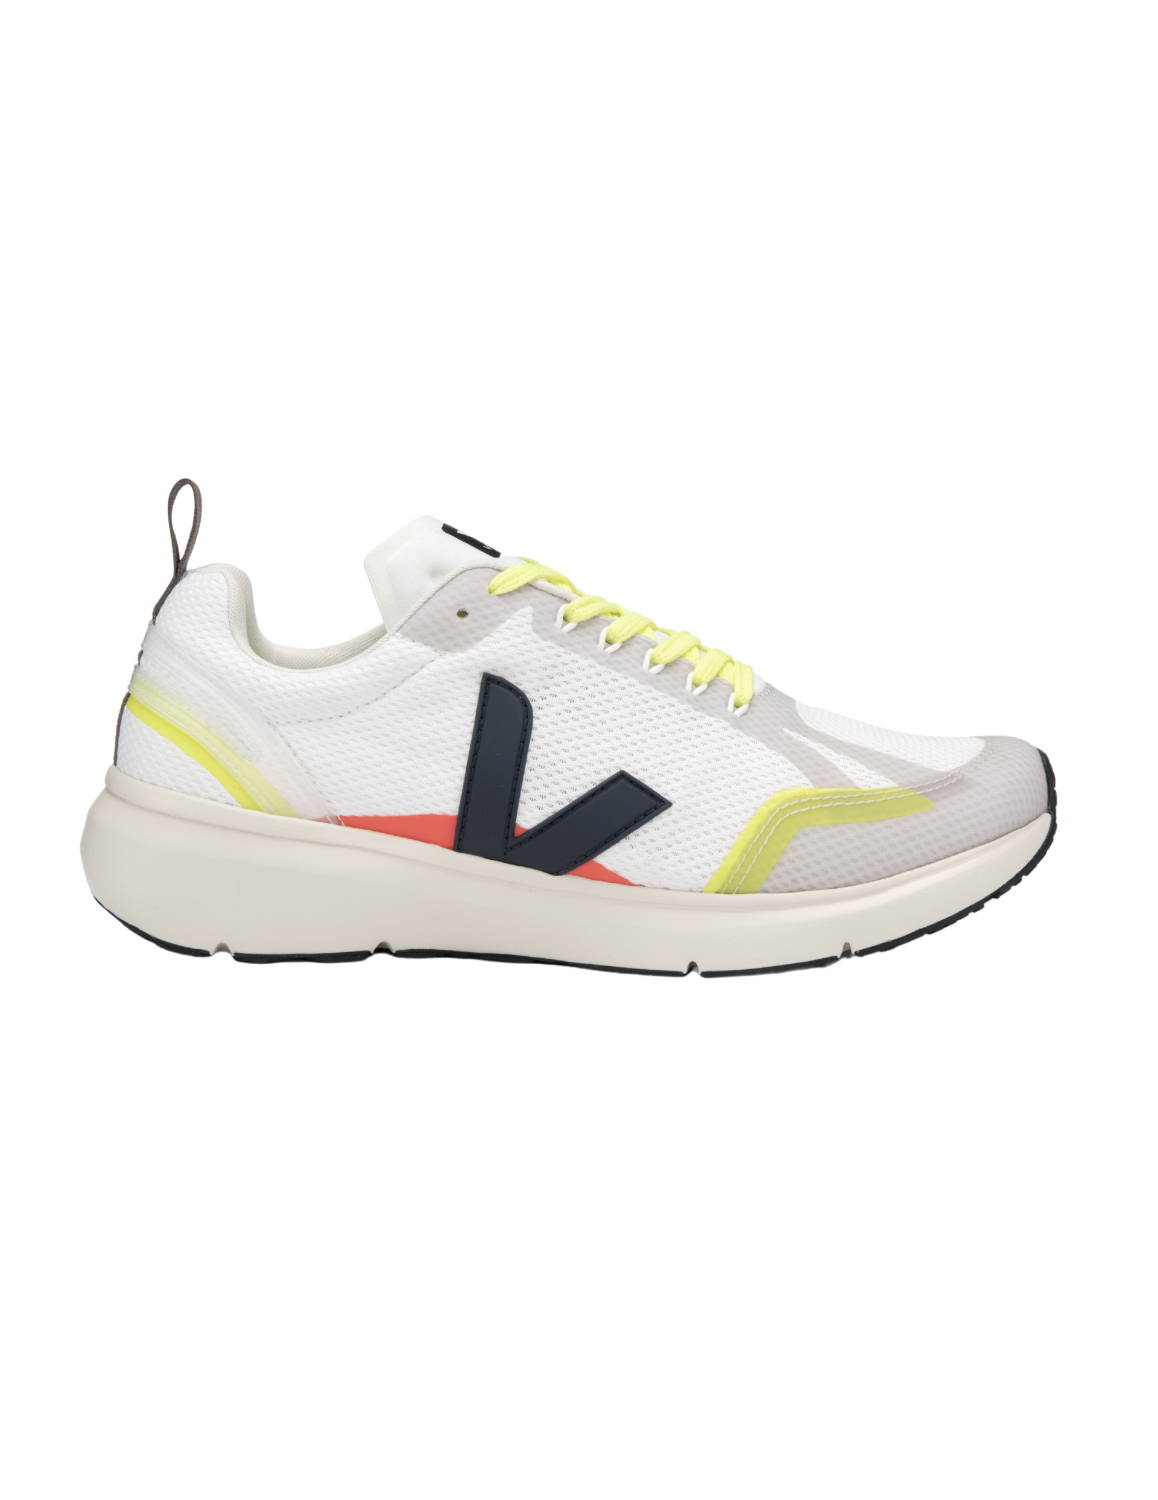 Chaussures de Running Veja Condor 2 Homme Blanc/Jaune